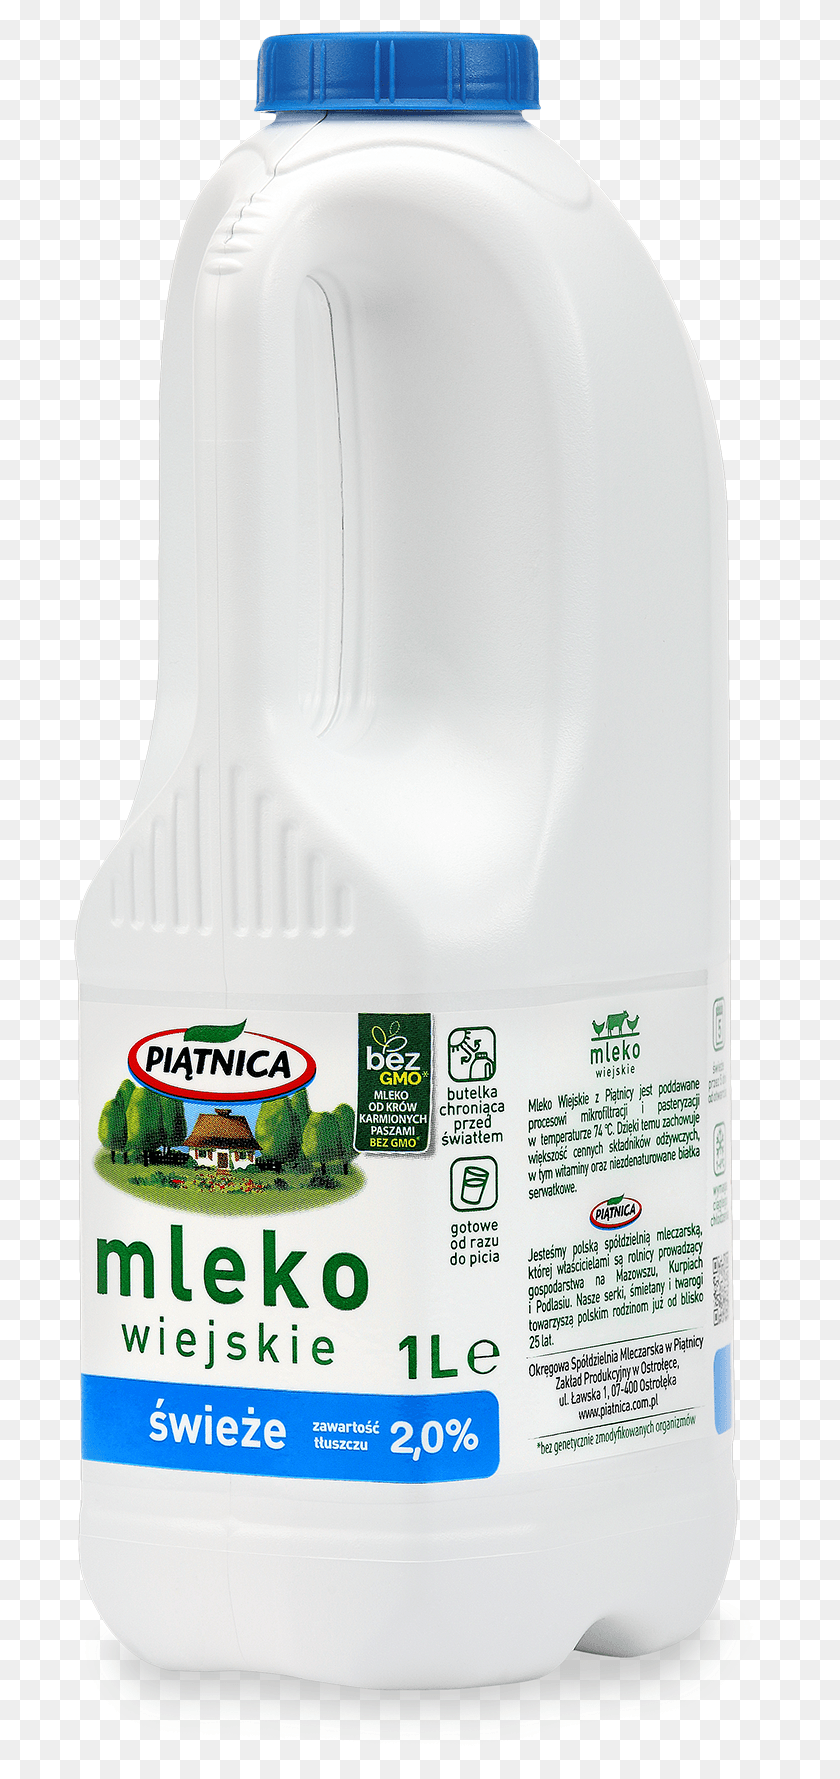 694x1719 Фотография Продукта Mleko Wiejskie Pitnica, Молоко, Напитки, Напитки Hd Png Скачать